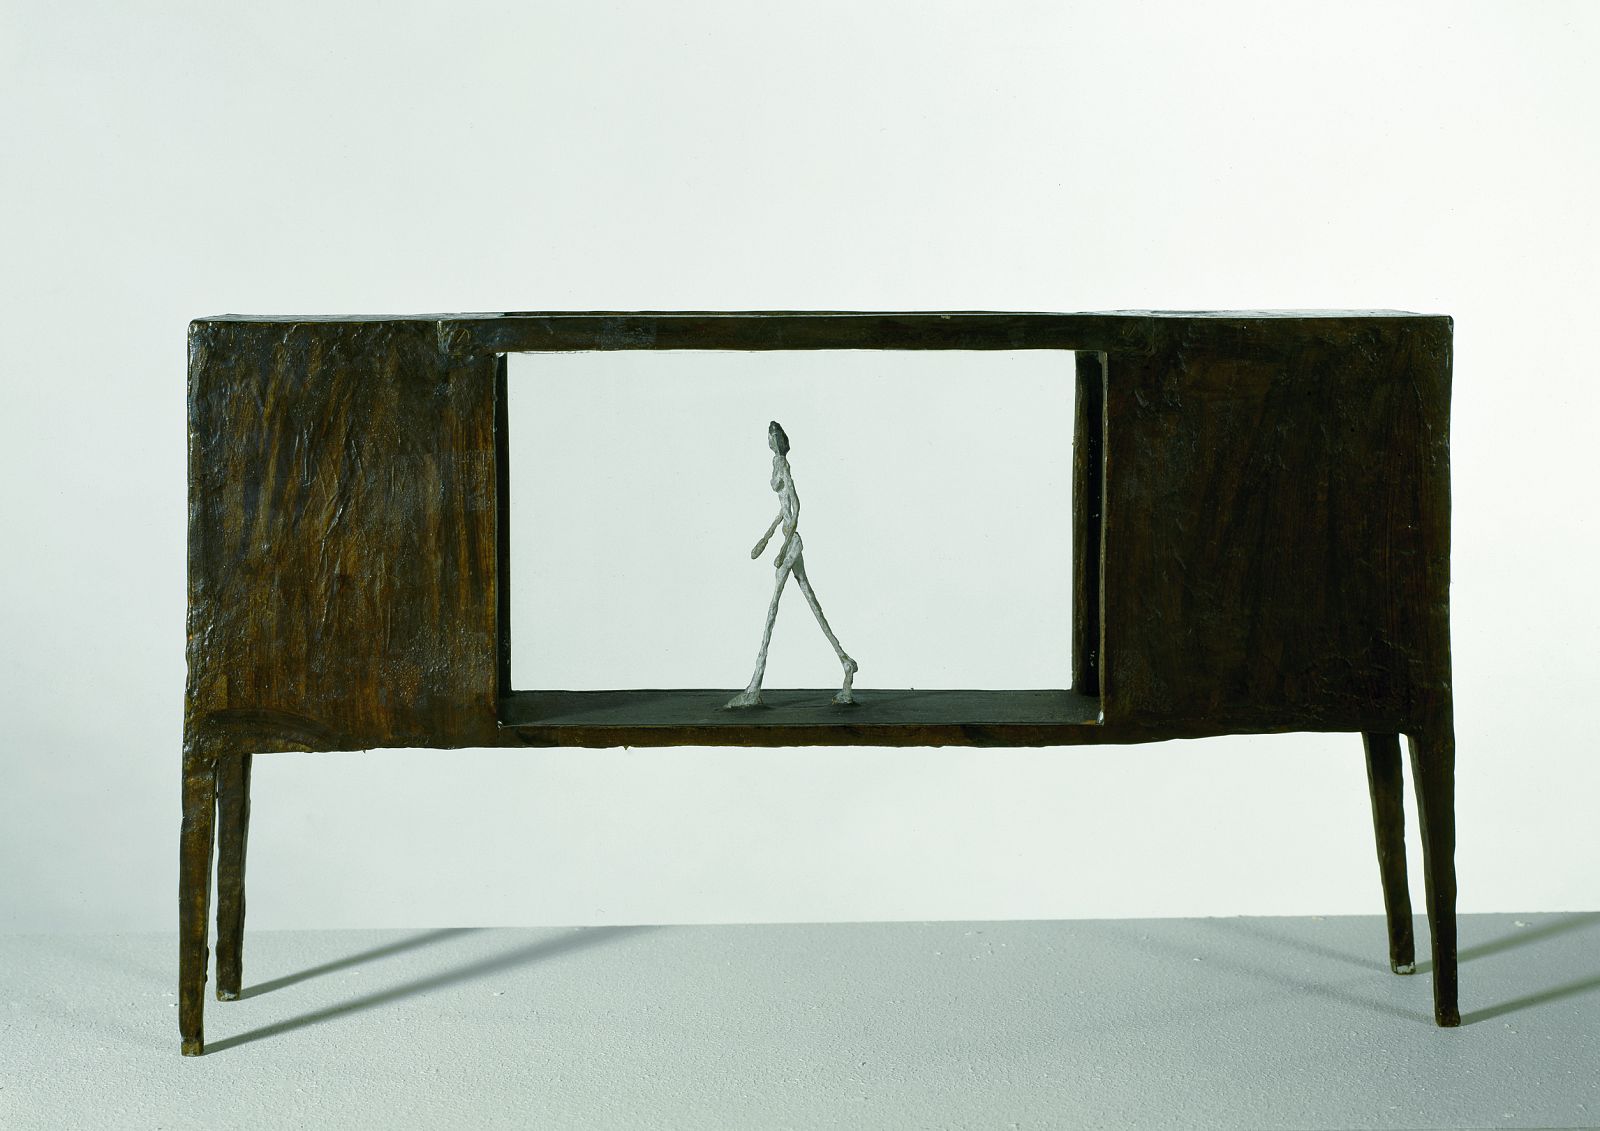 Pequeña figura dentro de una caja entre dos cajas que son casas (1950). Alberto Giacometti.